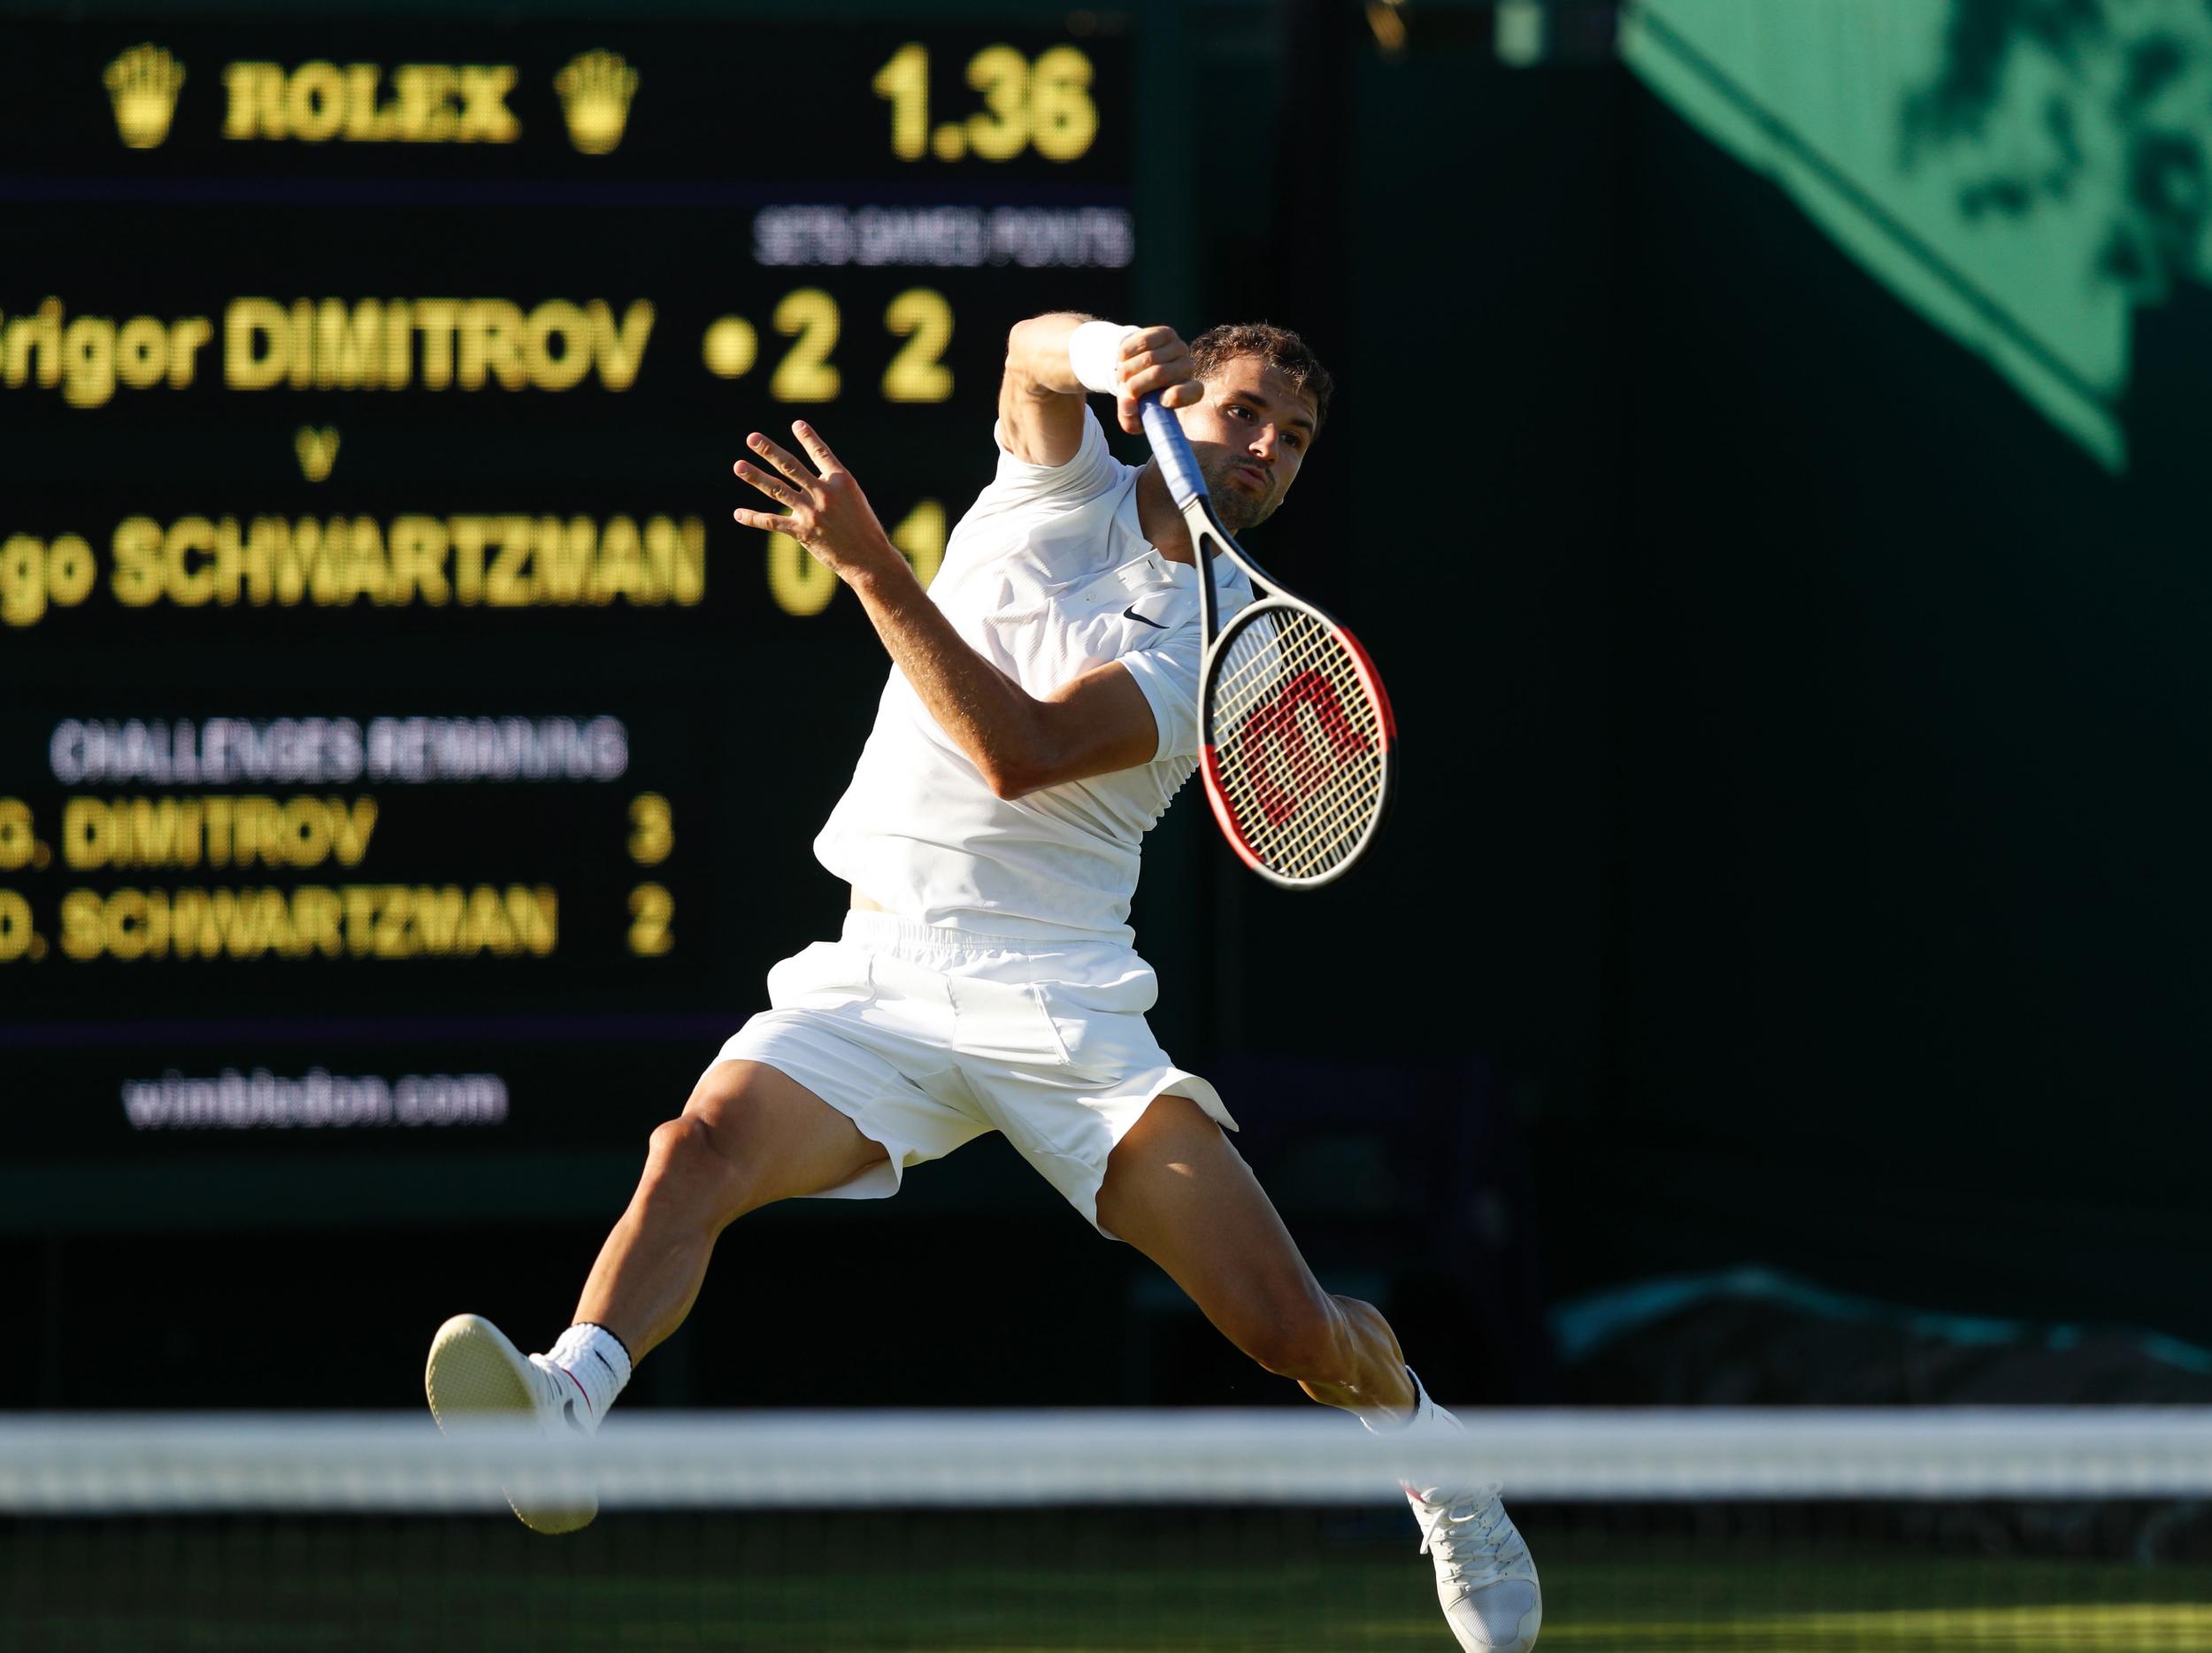 Dimitrov won his first round match at Wimbledon